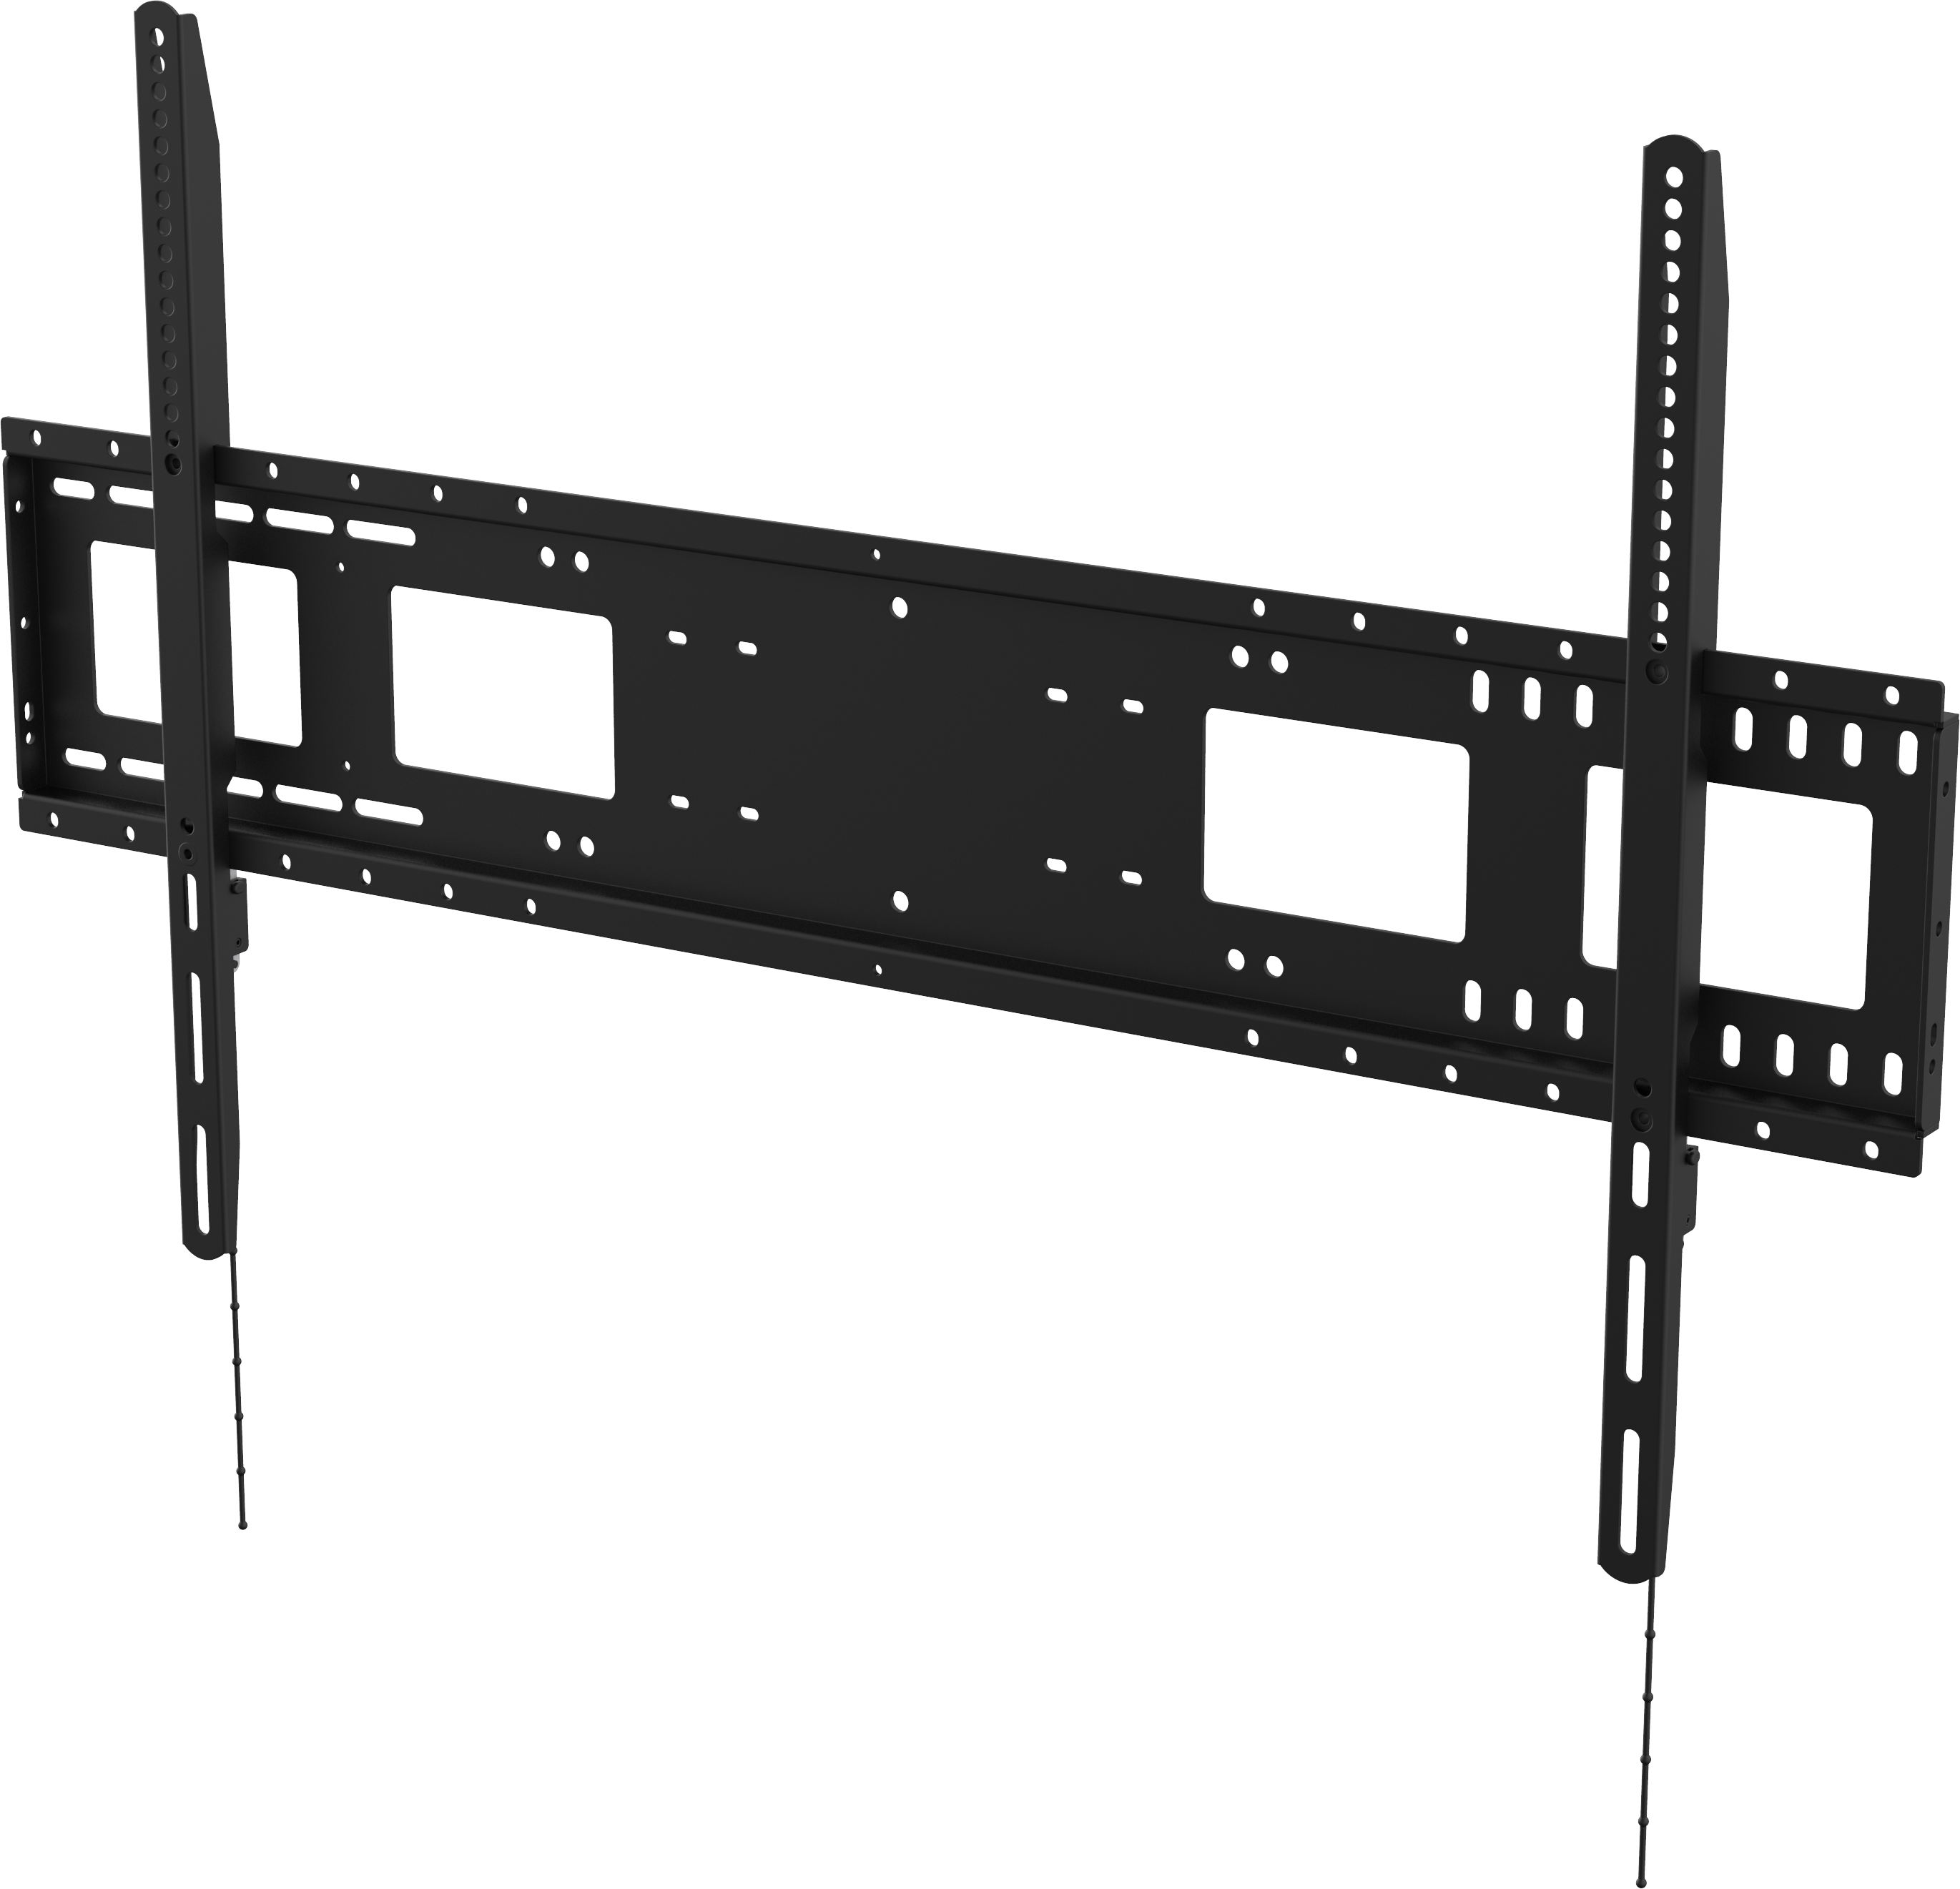 An image showing Heavy Duty Flat-Panel Wall Mount 1000×600